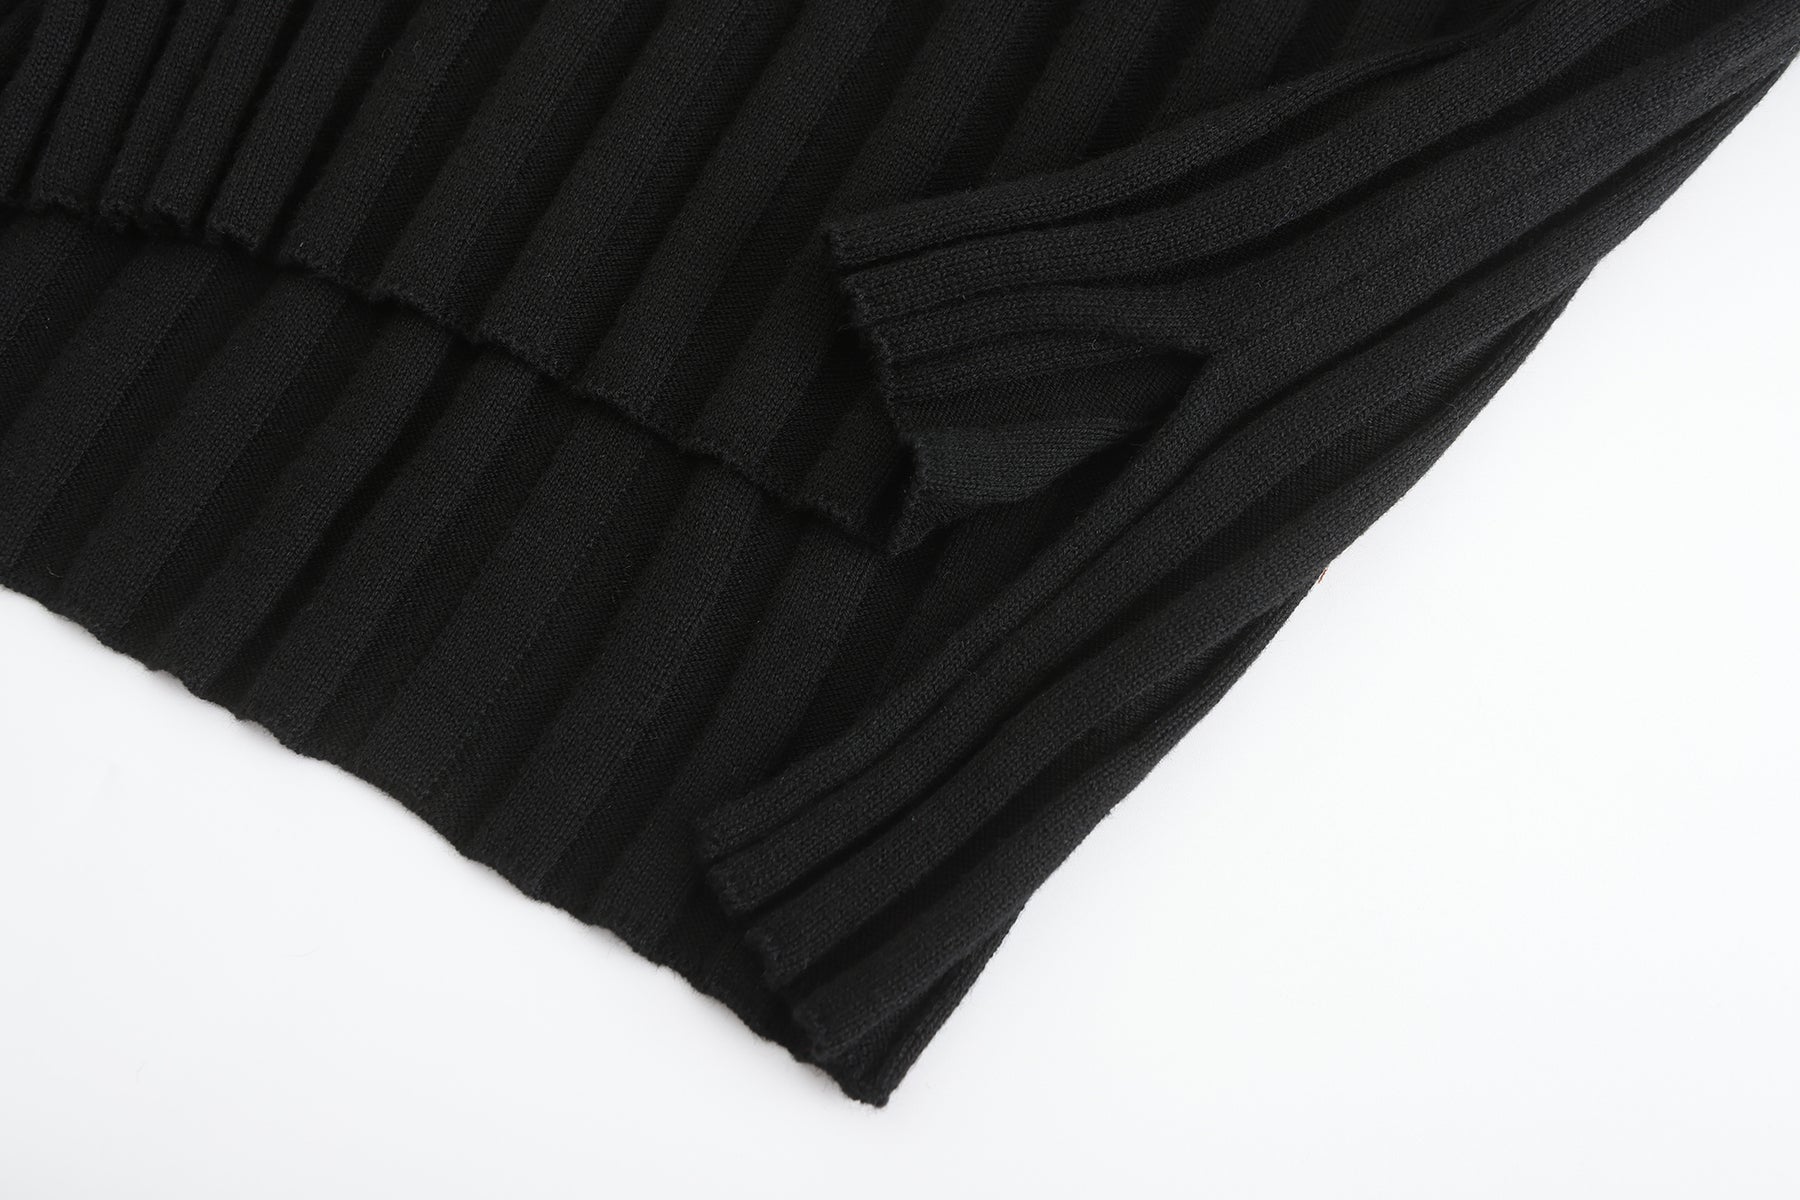 Fuzzy Sleeve Knit sweater - Black